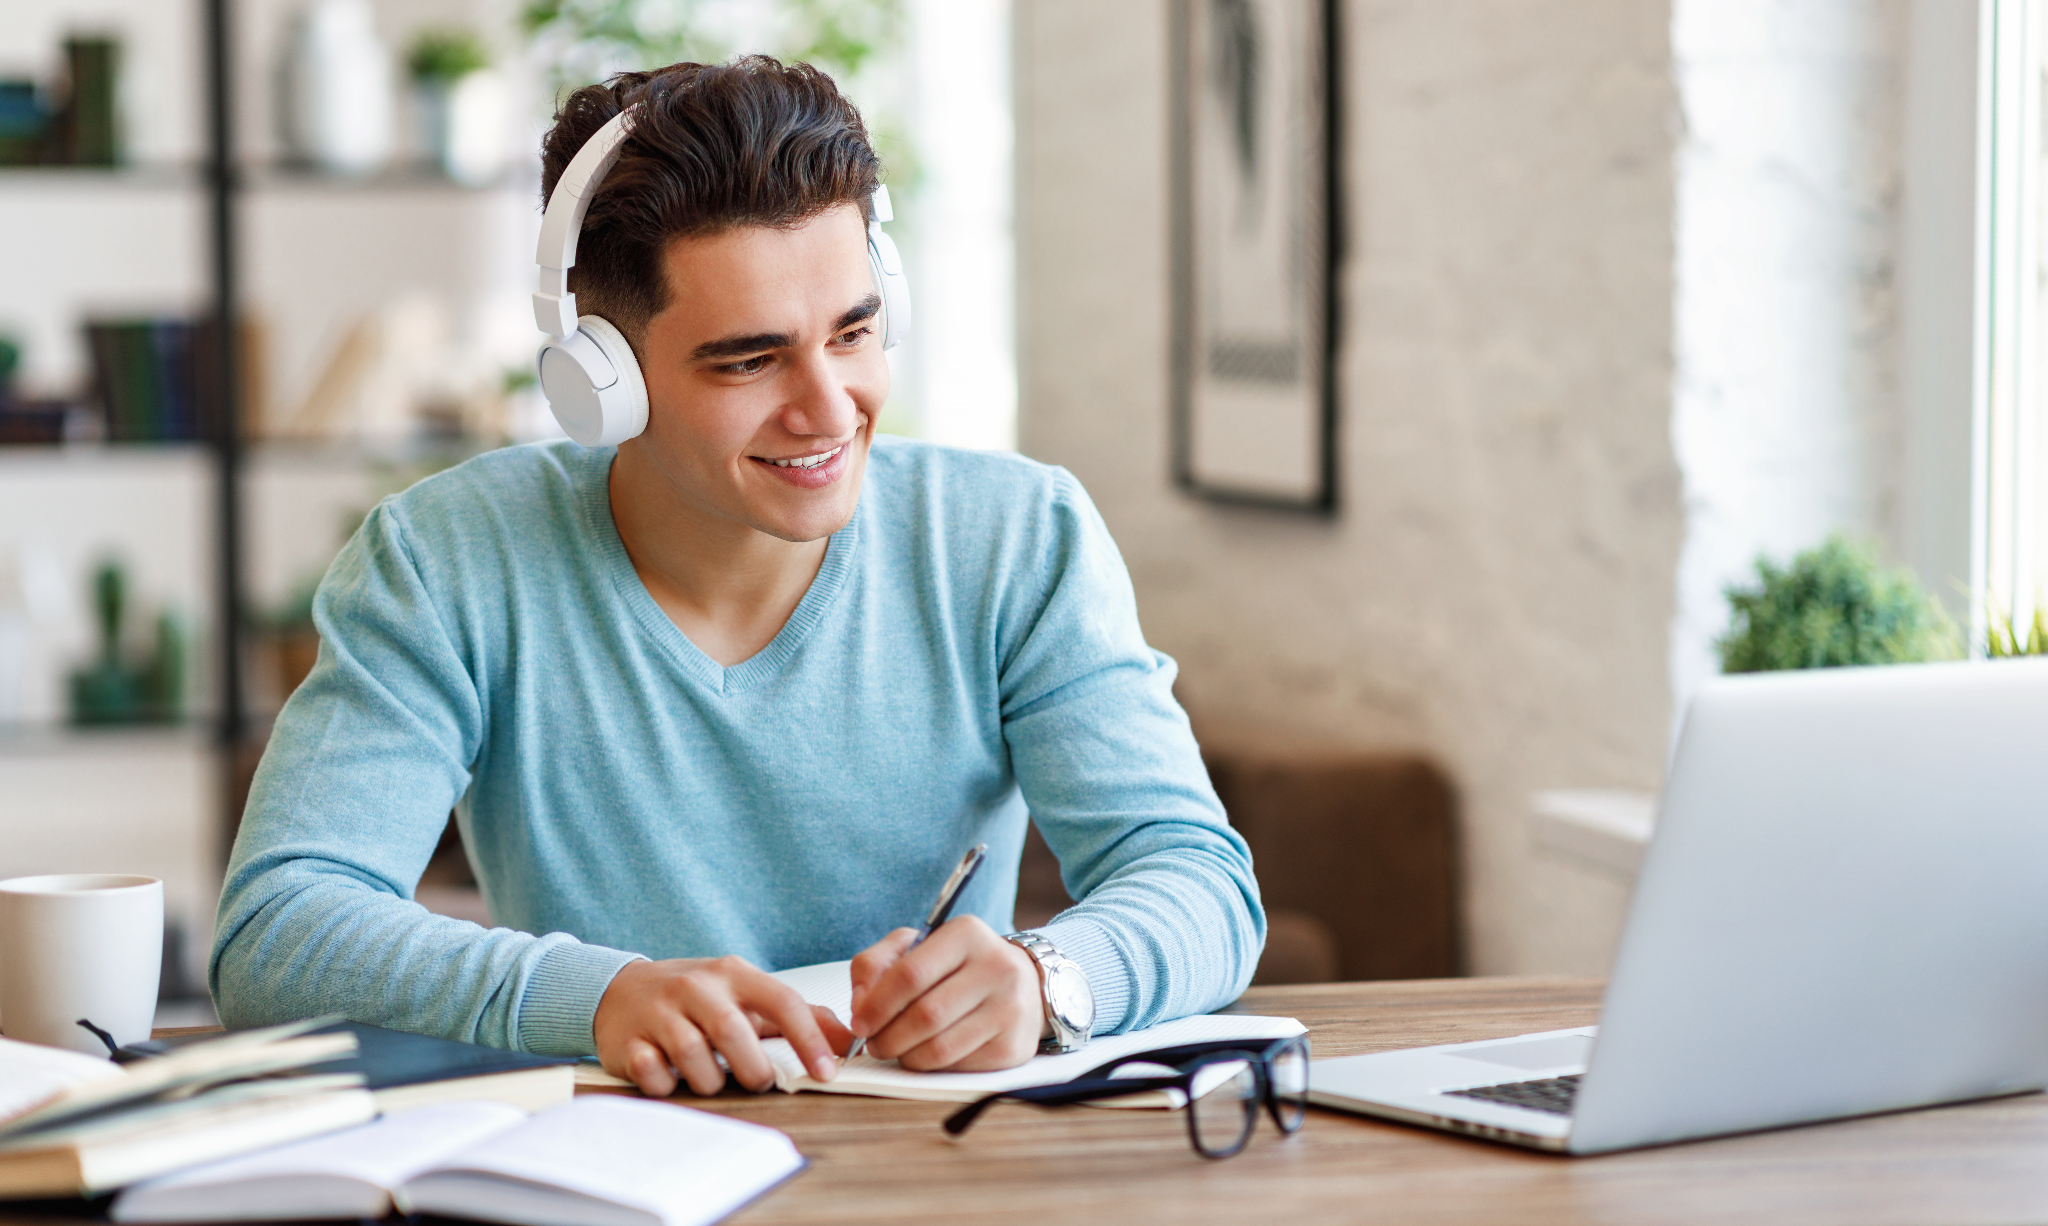 Happy student using America's Professor online insurance course